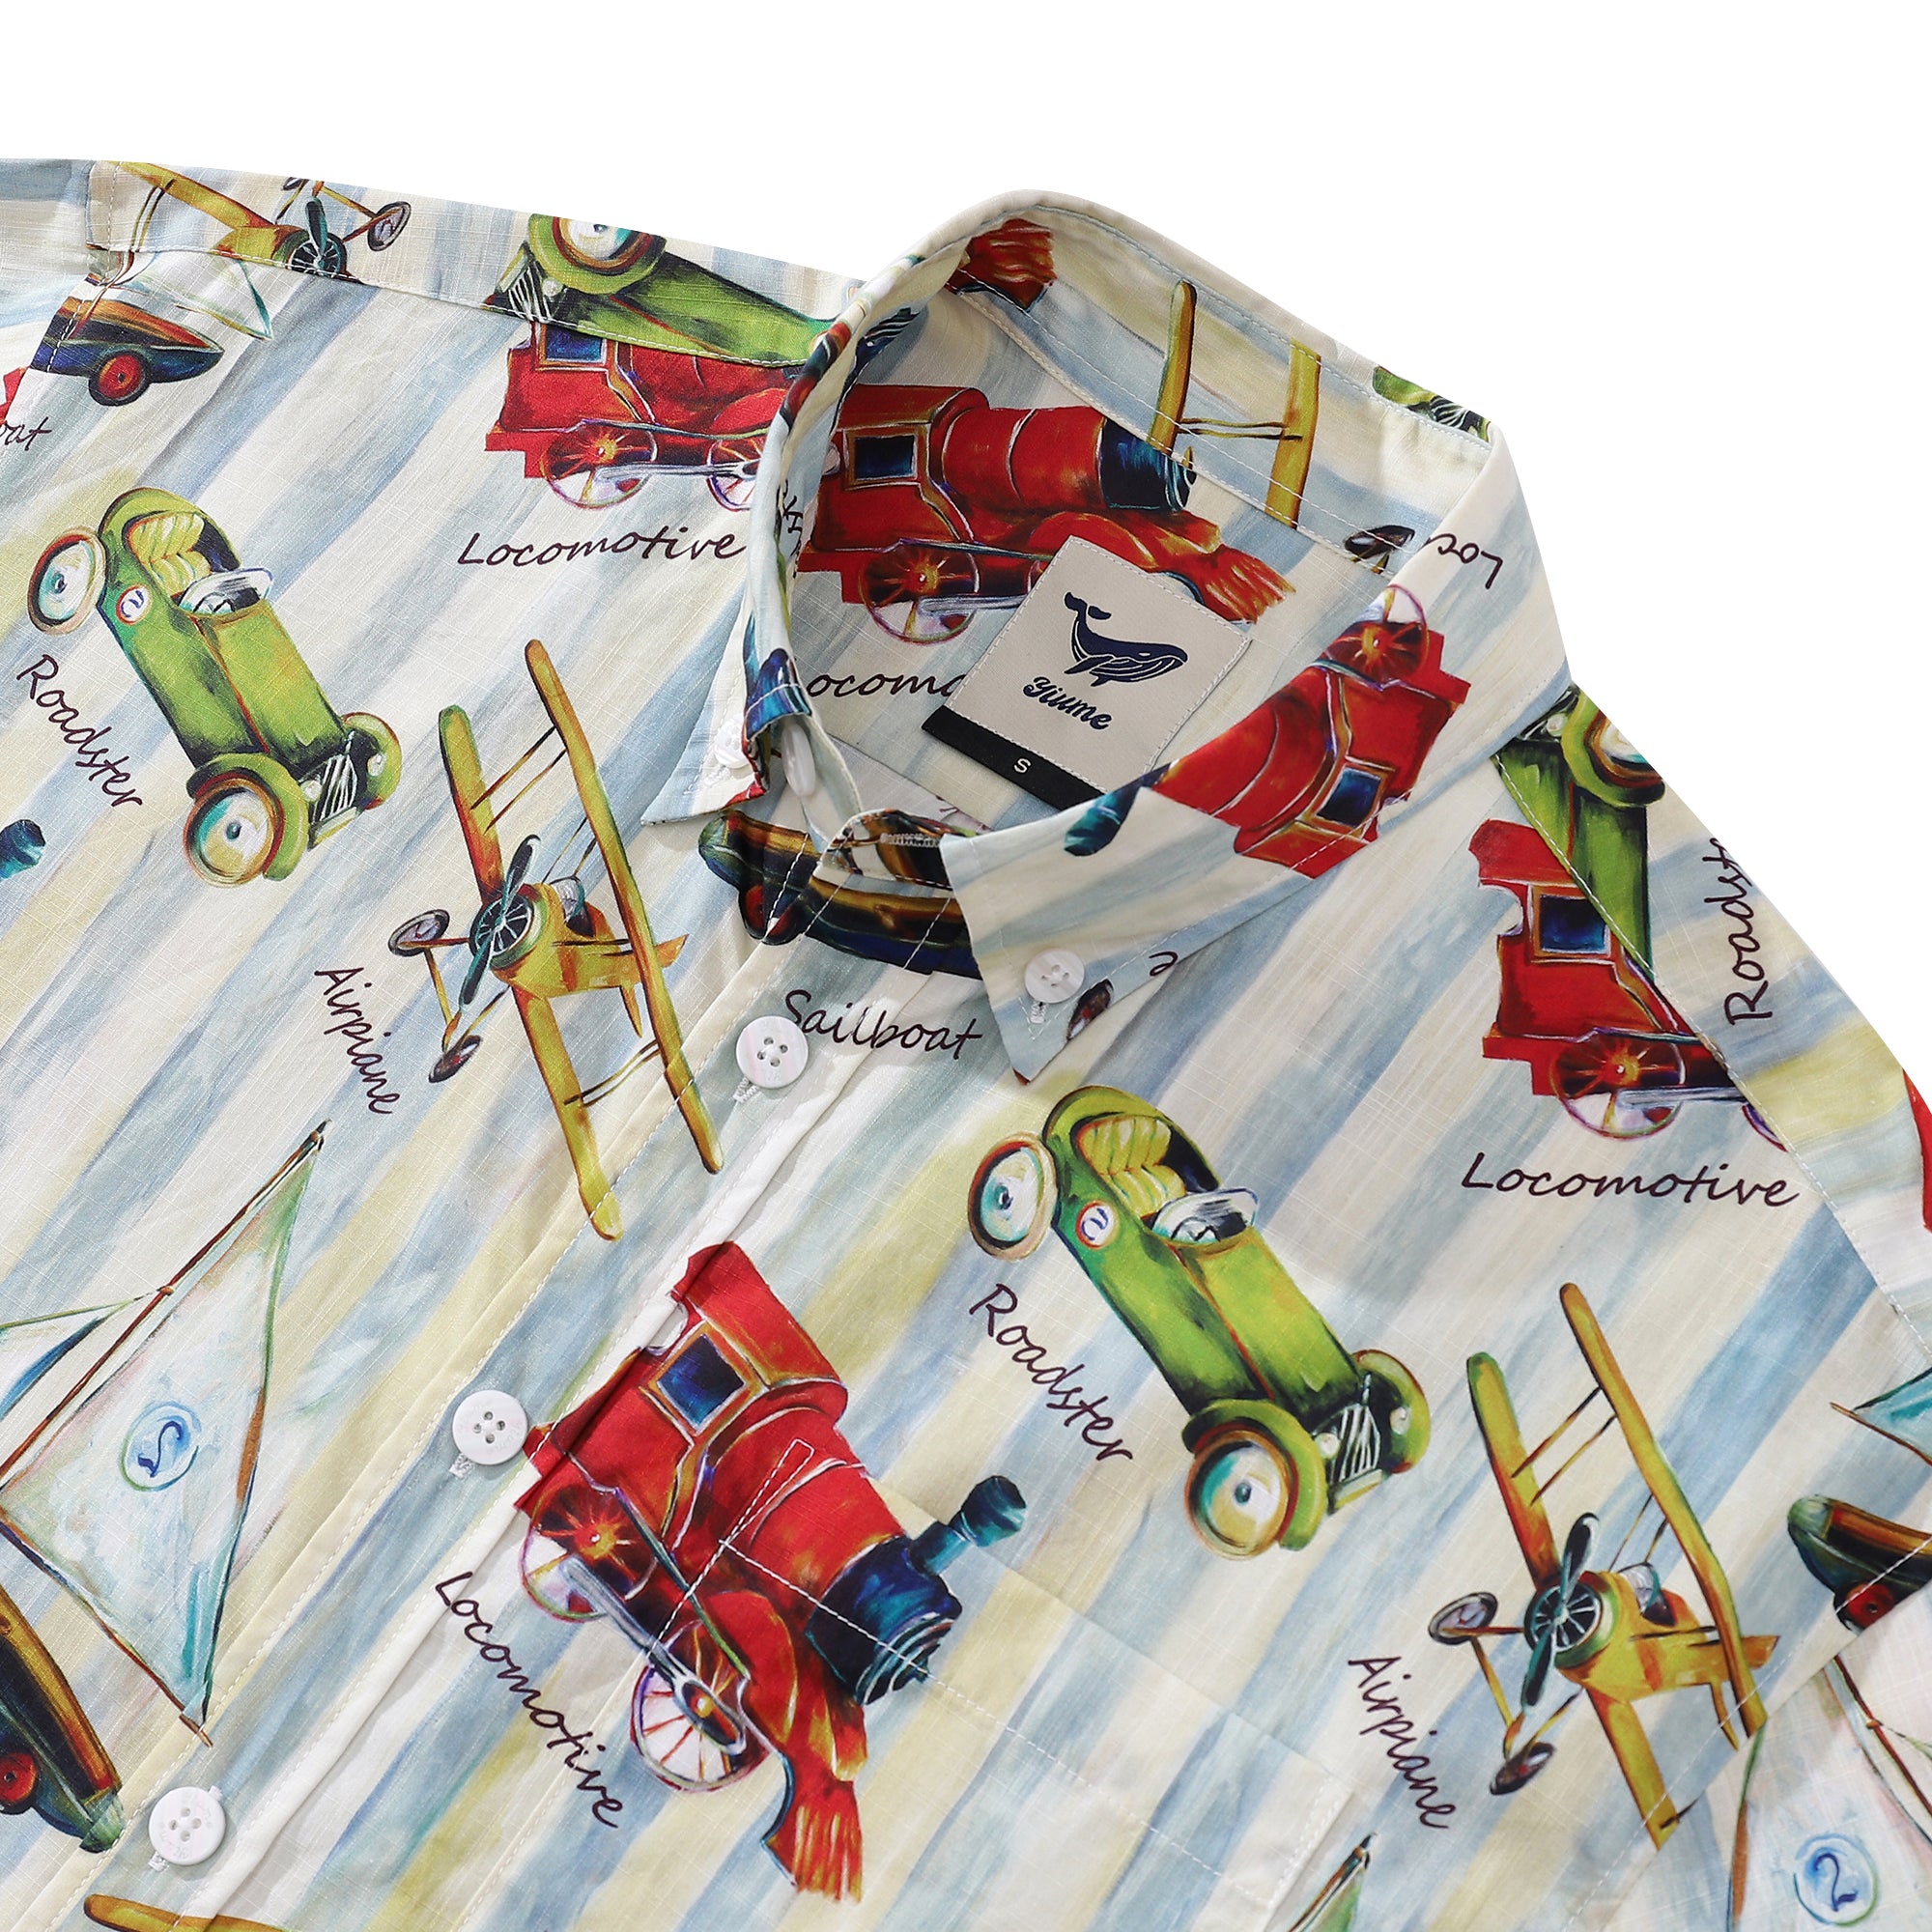 Men's Hawaiian Shirt Travel Memories Print Cotton Button-down Short Sleeve Aloha Shirt